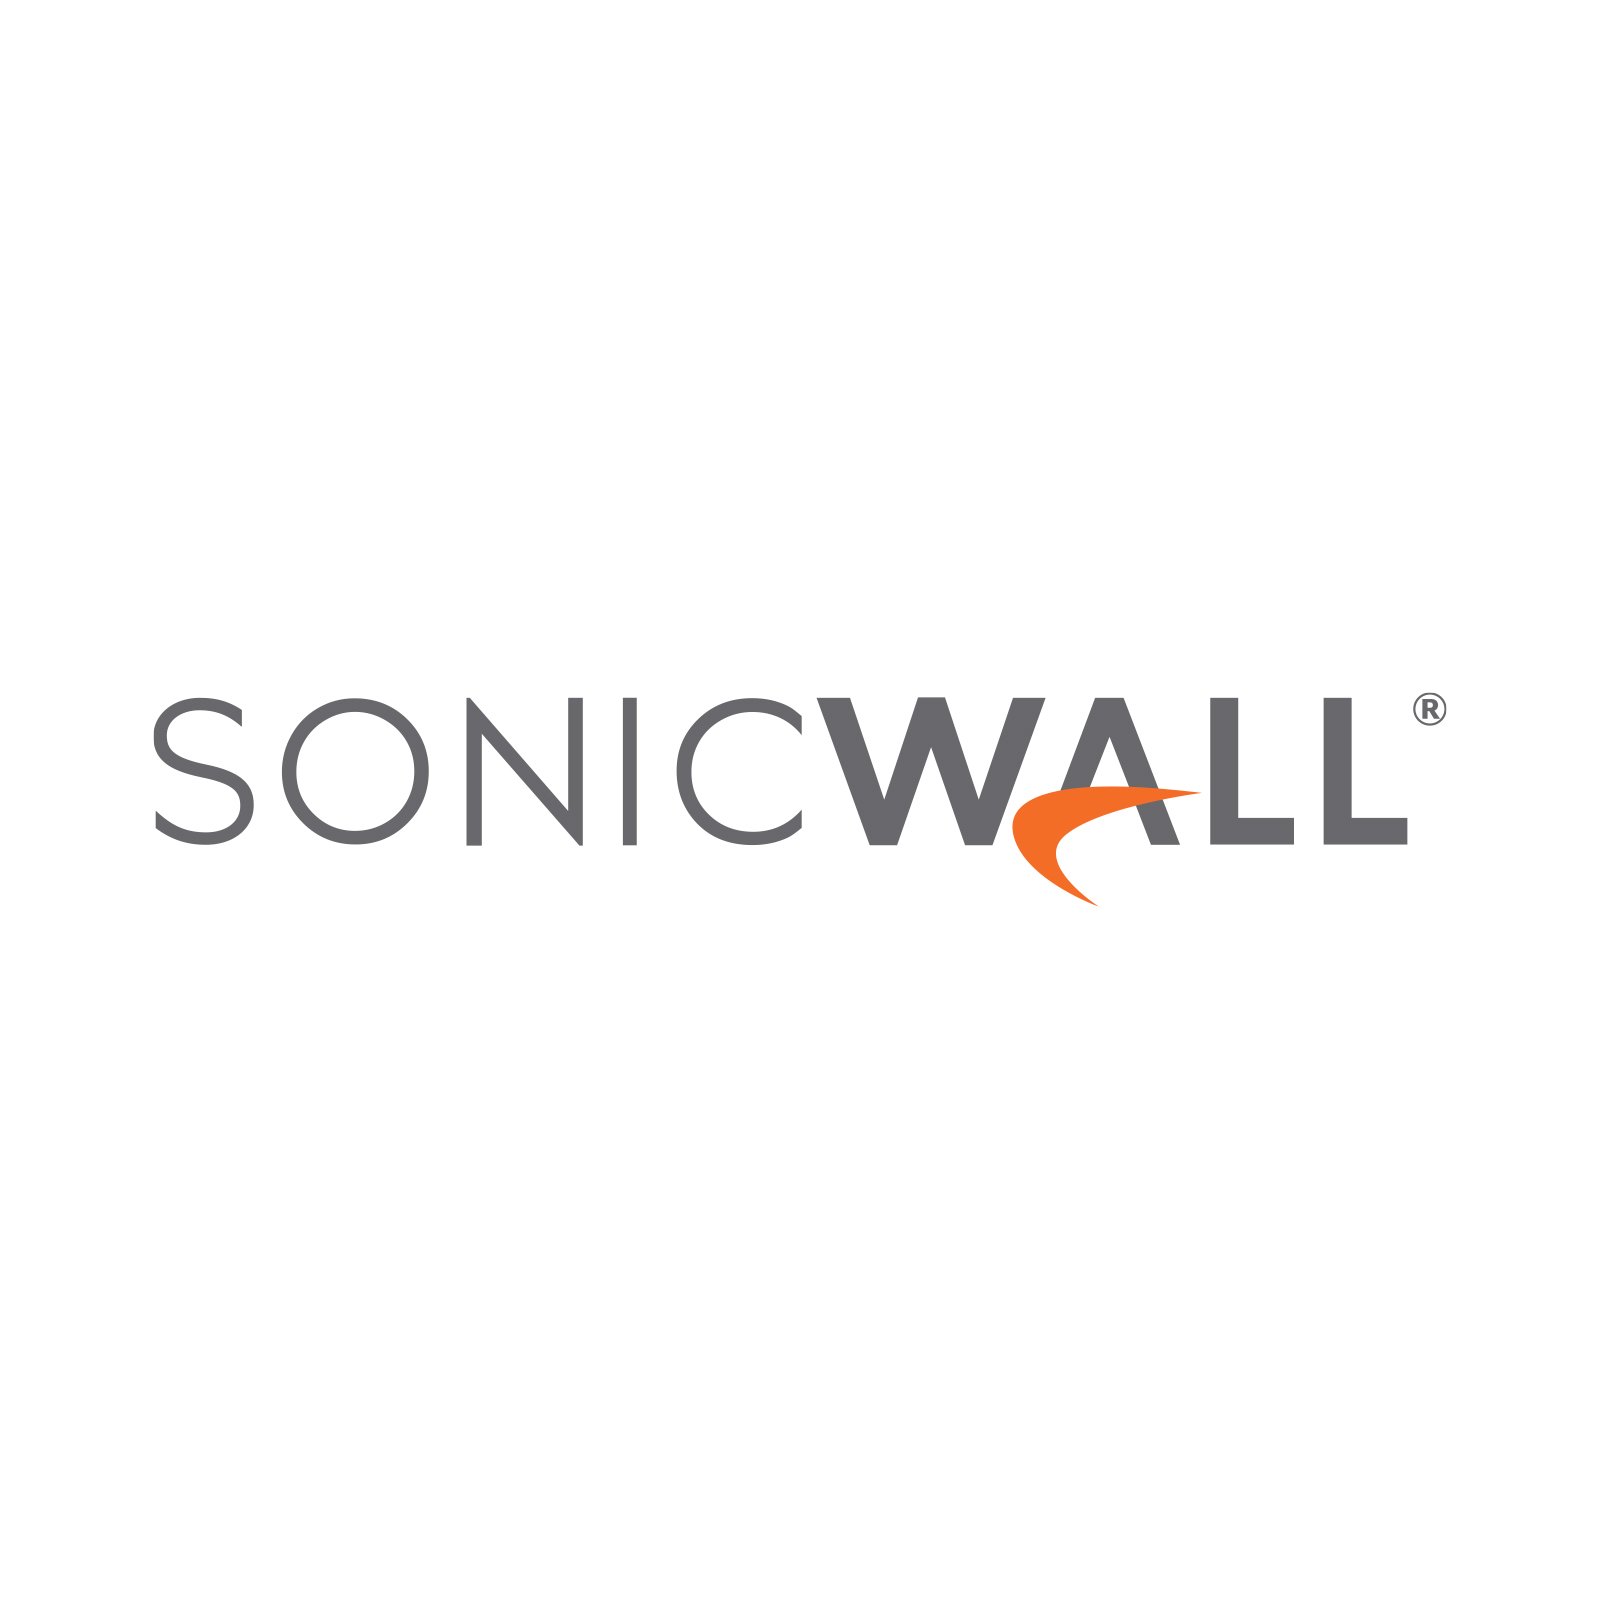 Sonicwall.jpg